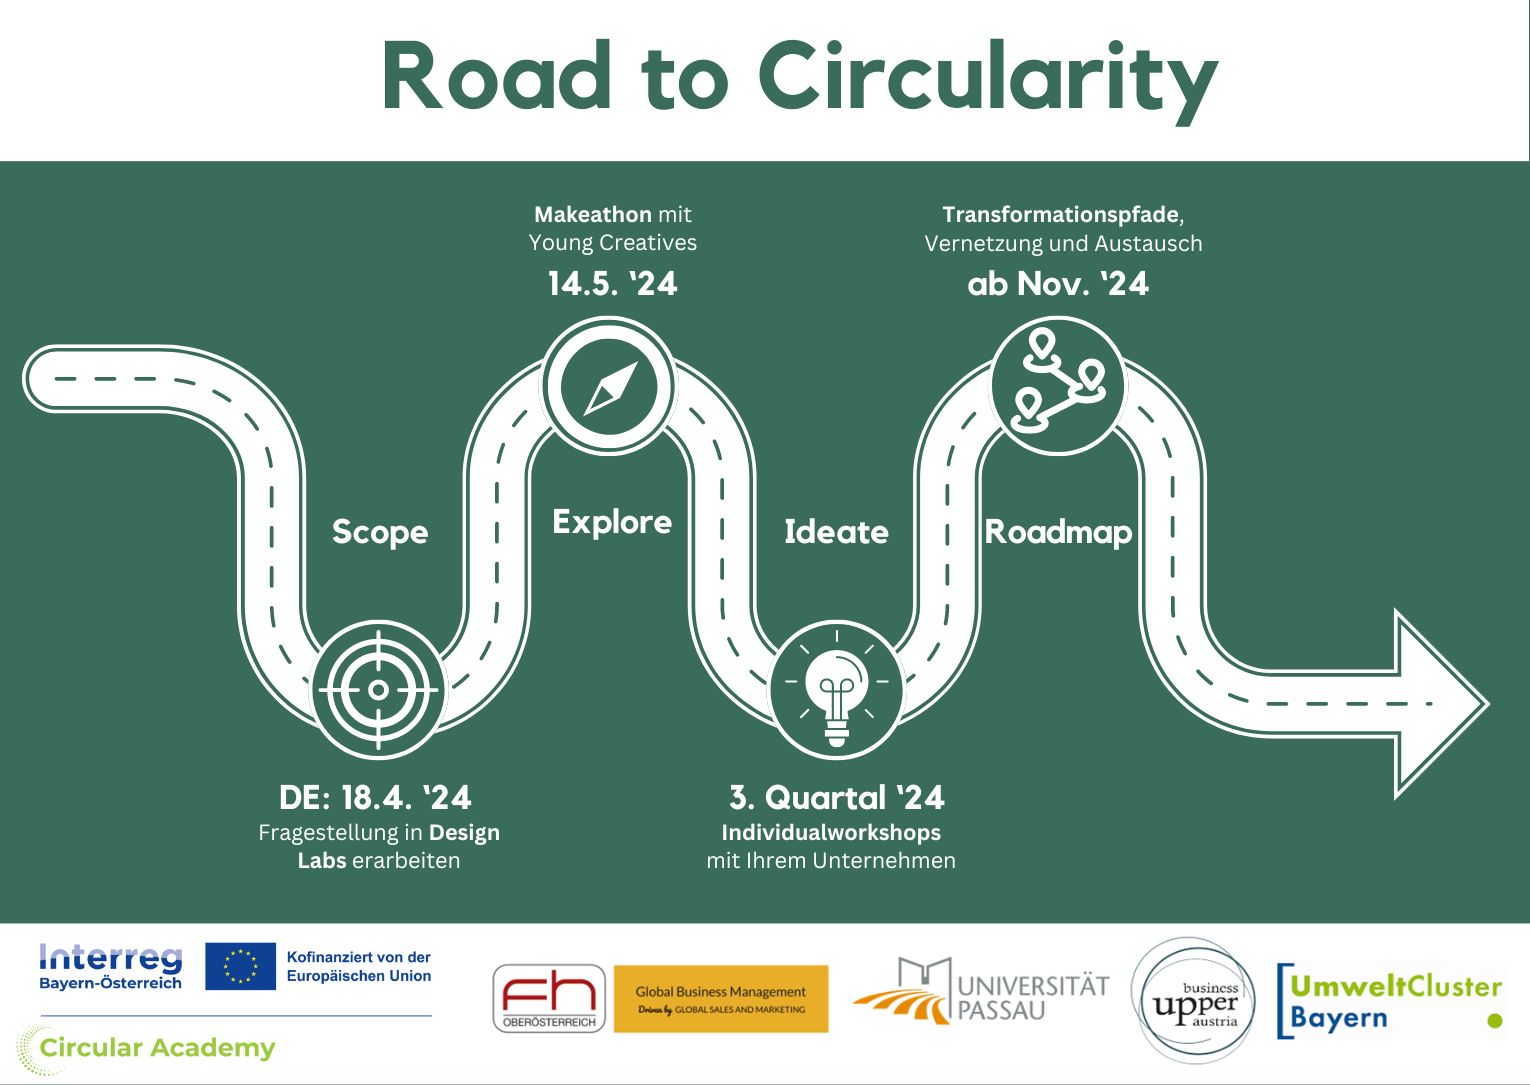 Road to Circularity